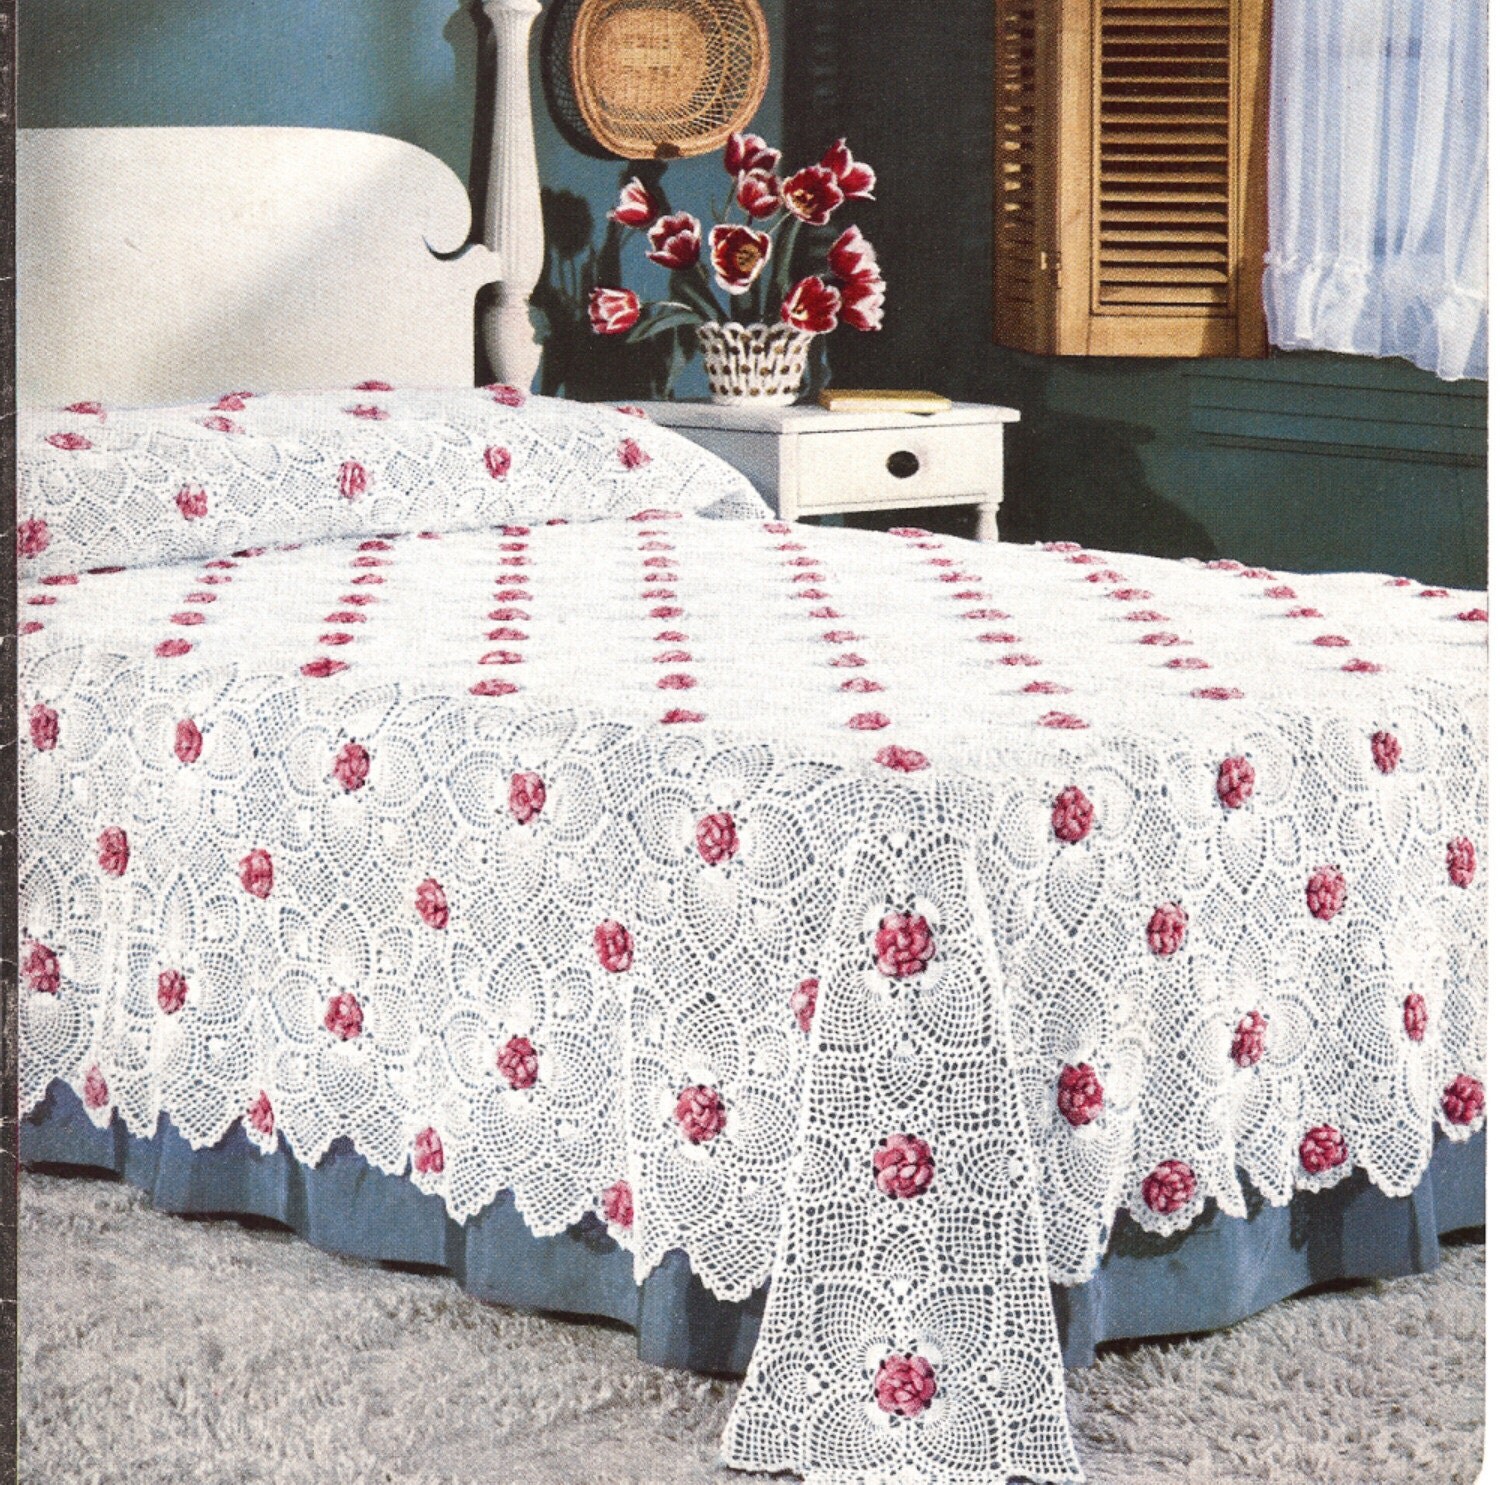 Rose Pineapple bedspread vintage crochet pattern PDF by Ellisadine